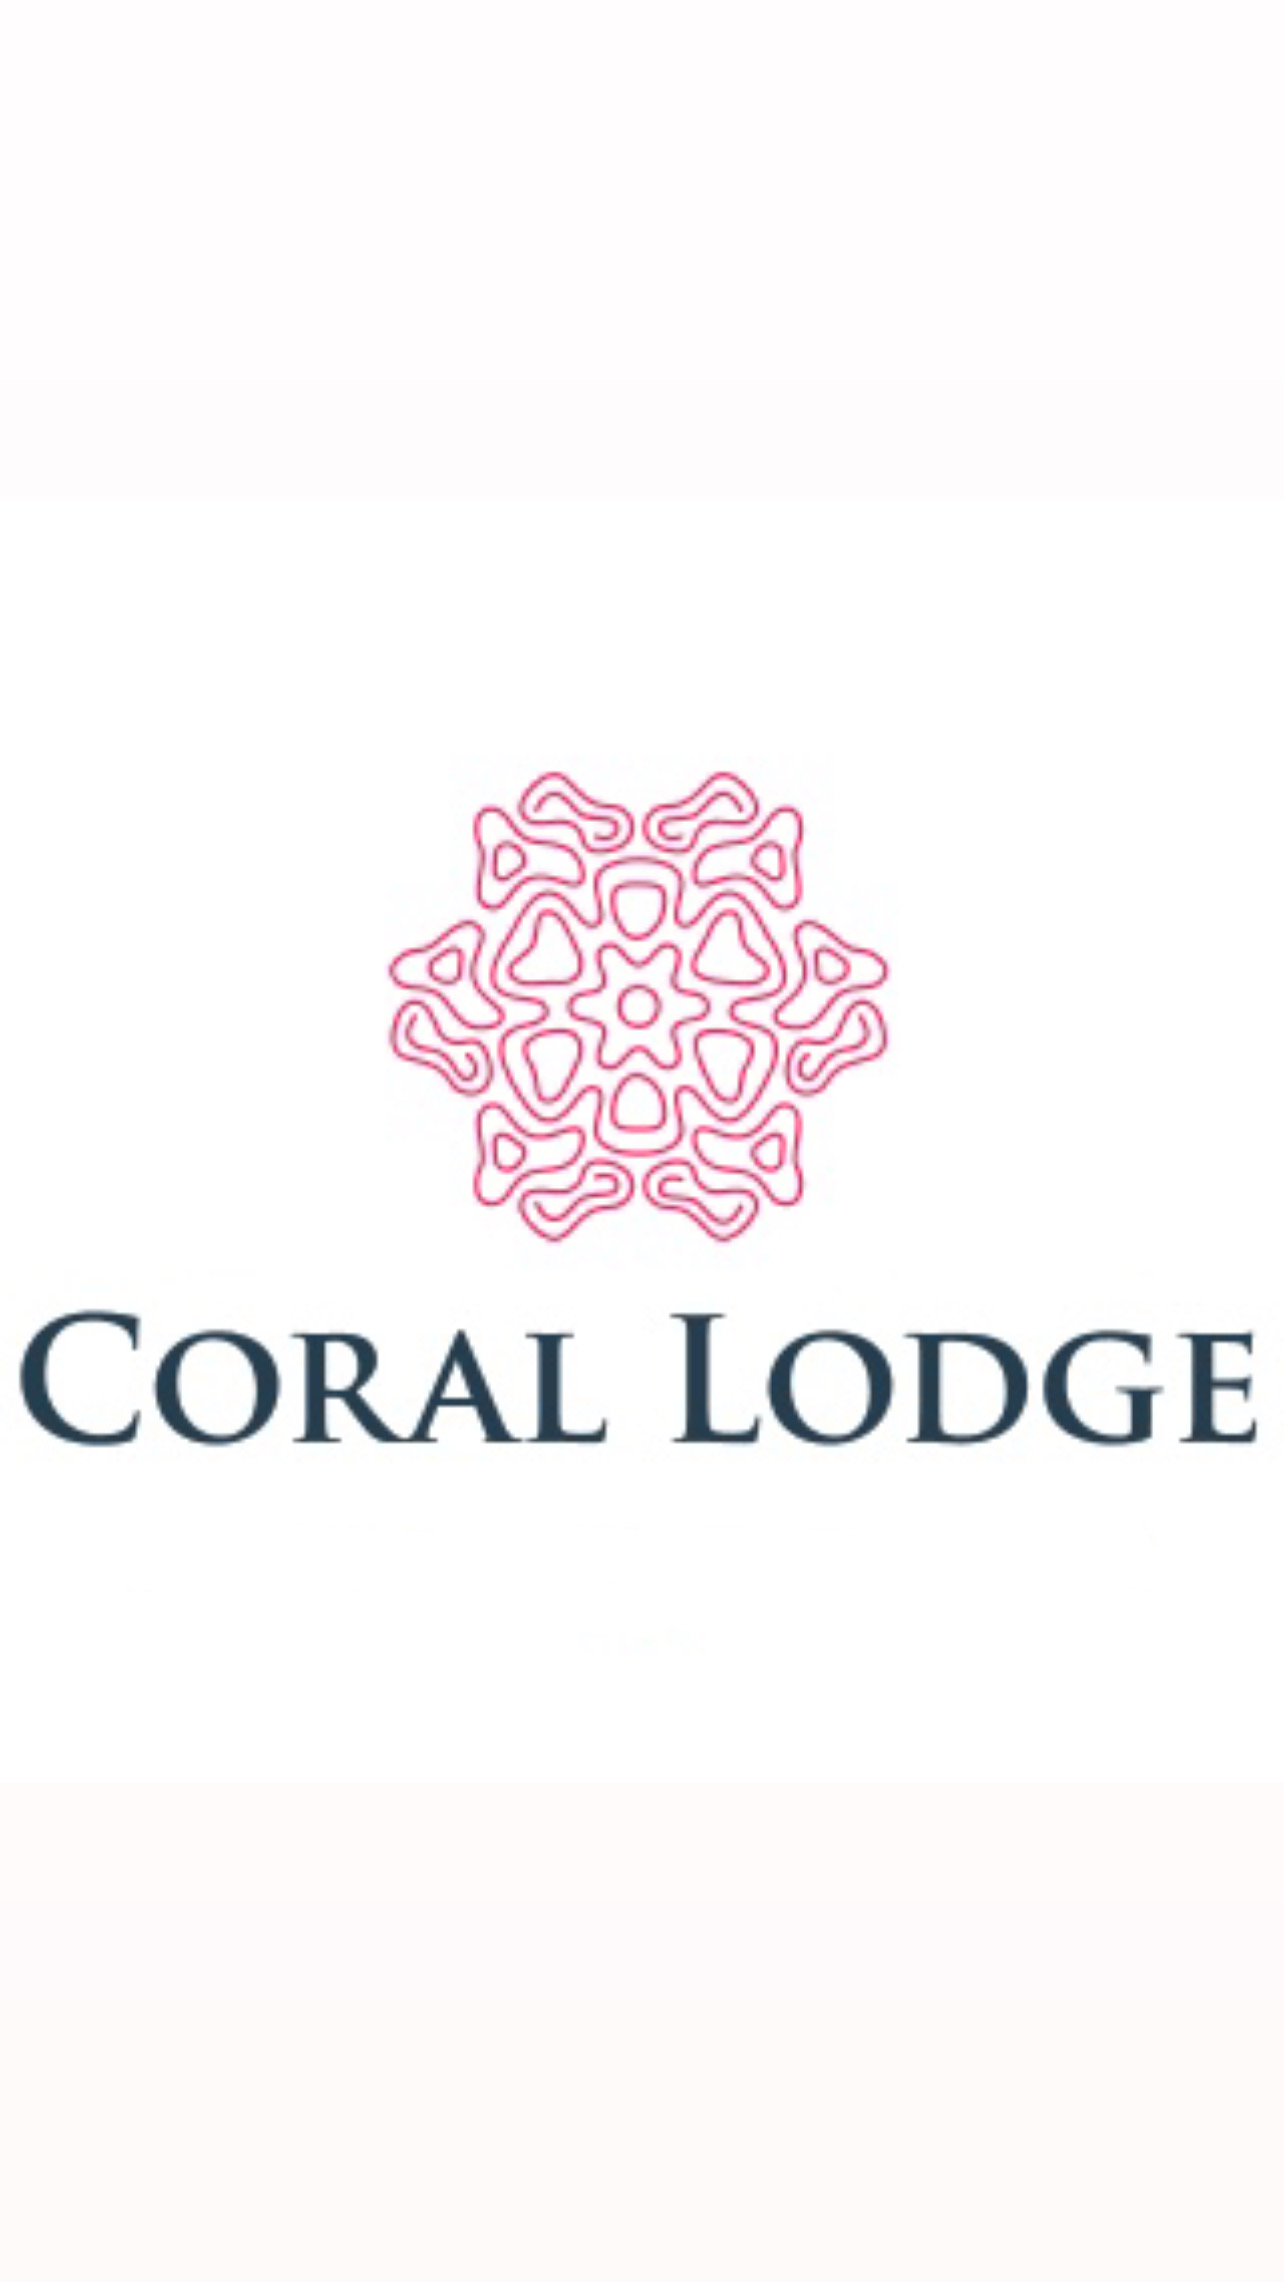 Coral lodge Executive